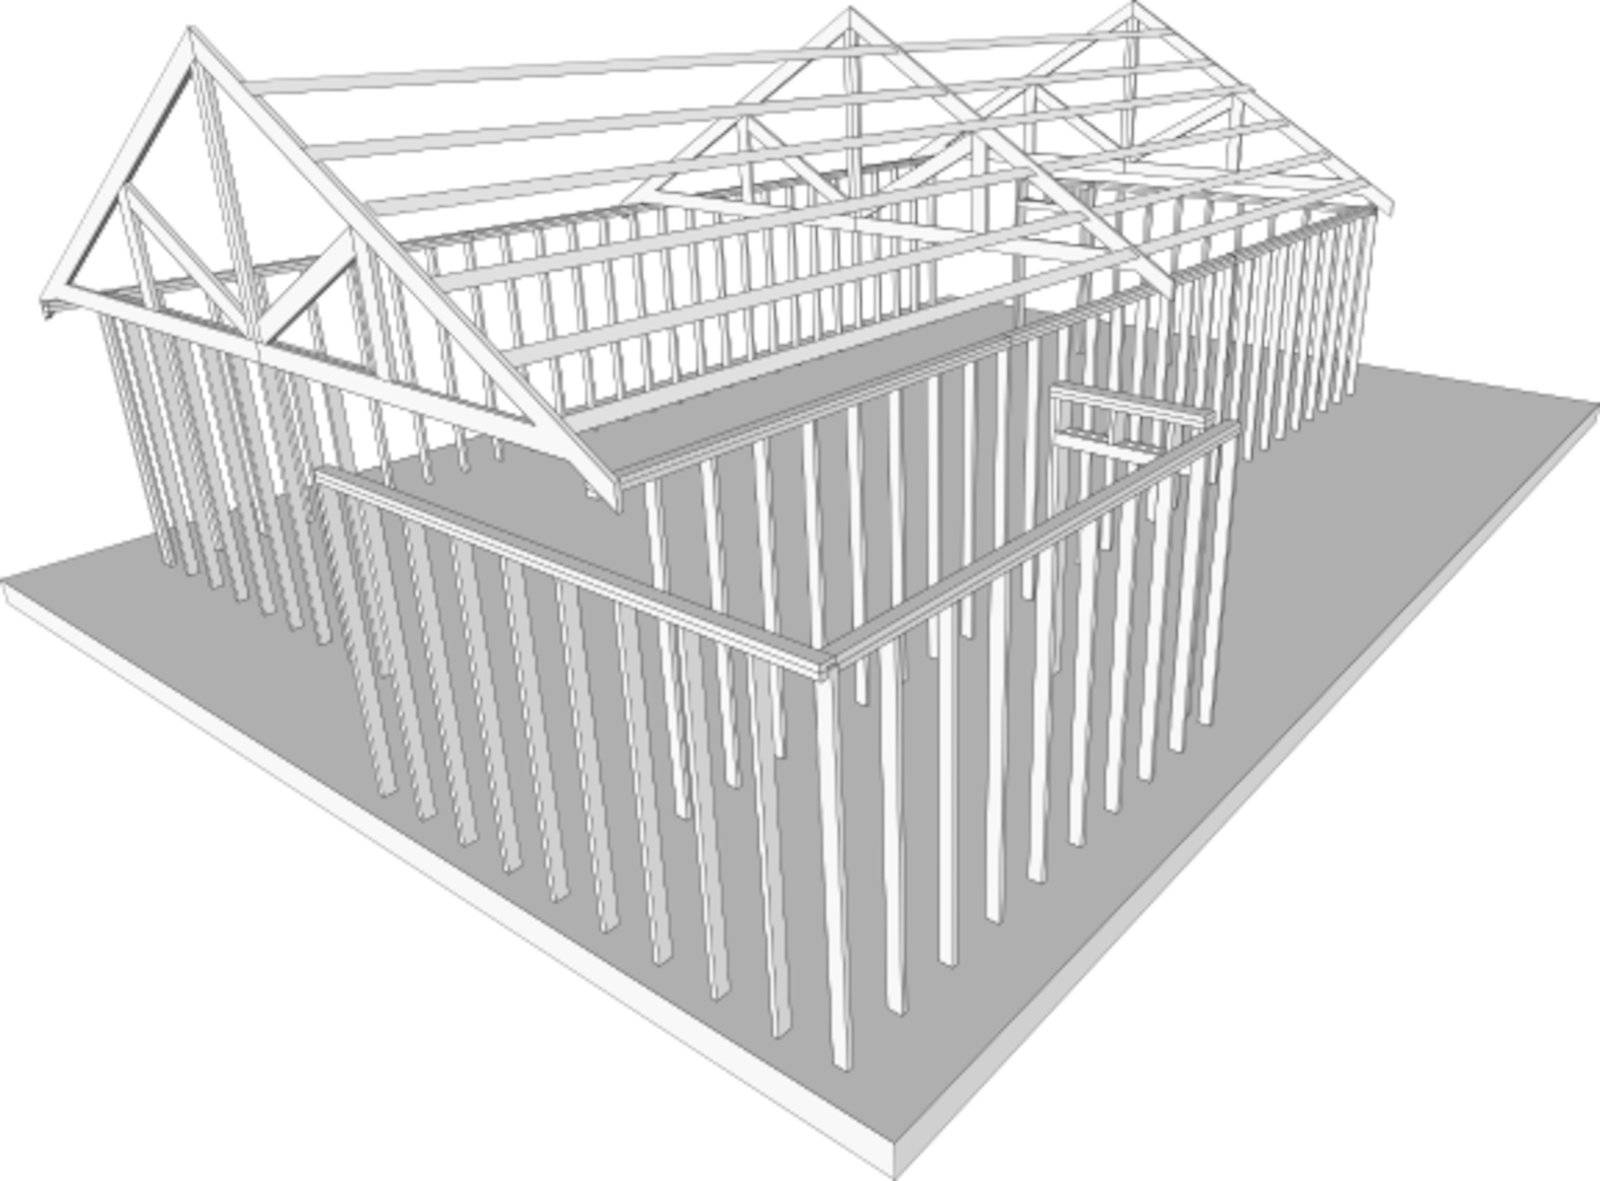 3D Architectural Model